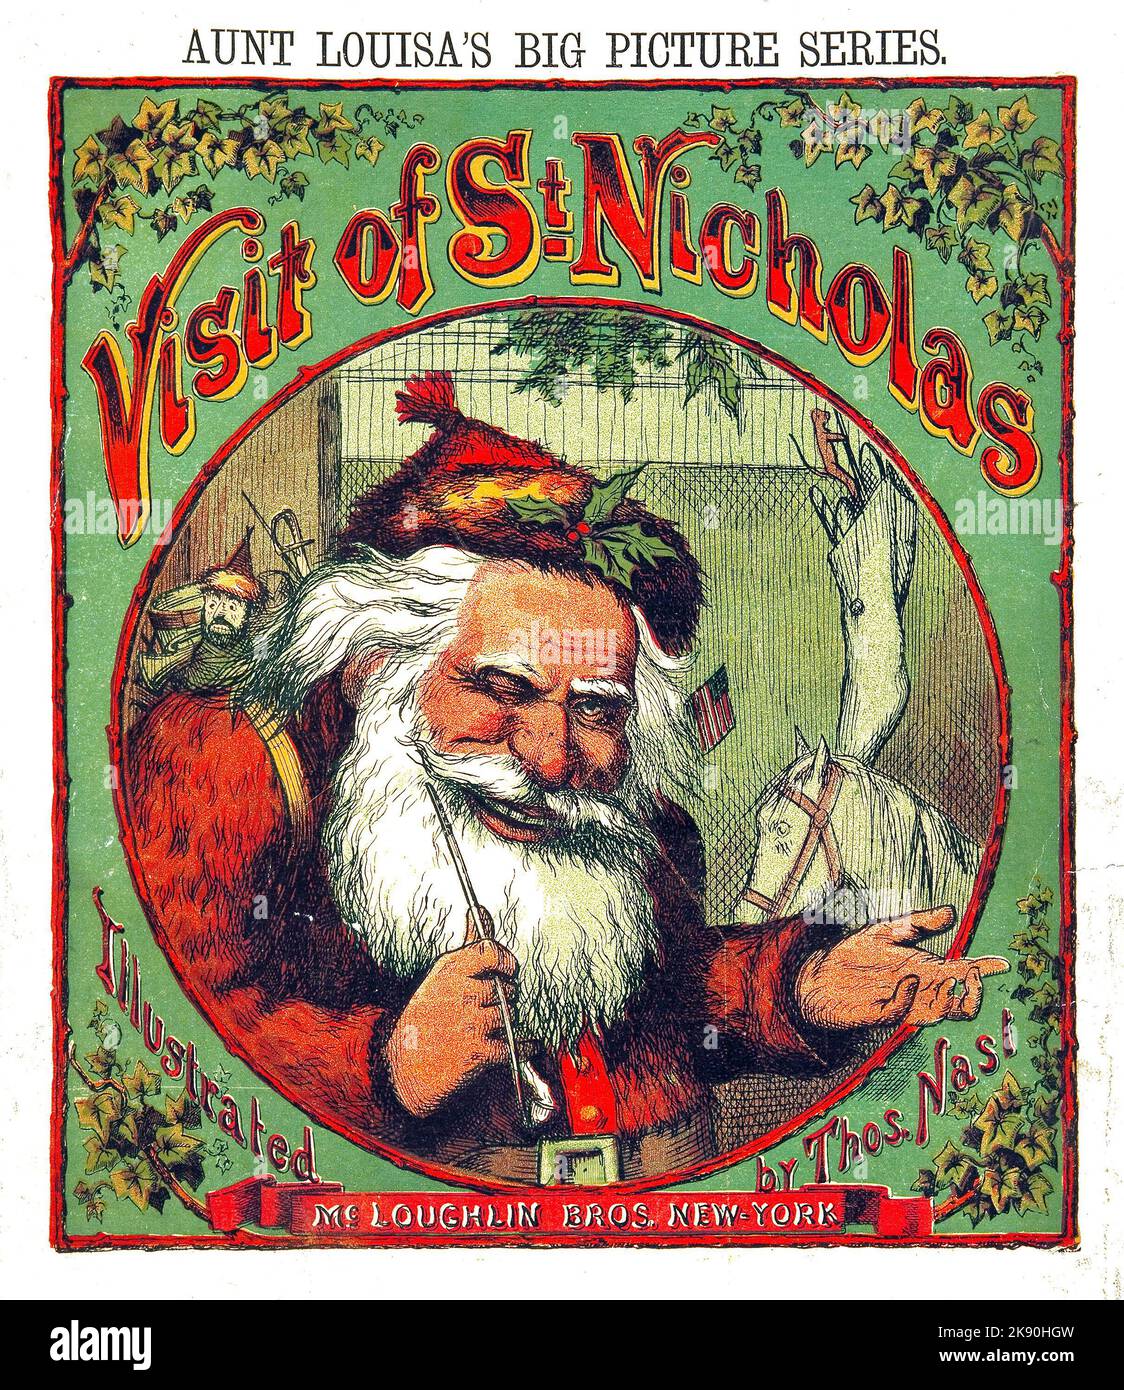 Visit of St. Nicholas - Santa Claus - Thomas Nast and Clement Moore illustration - 1869 Stock Photo